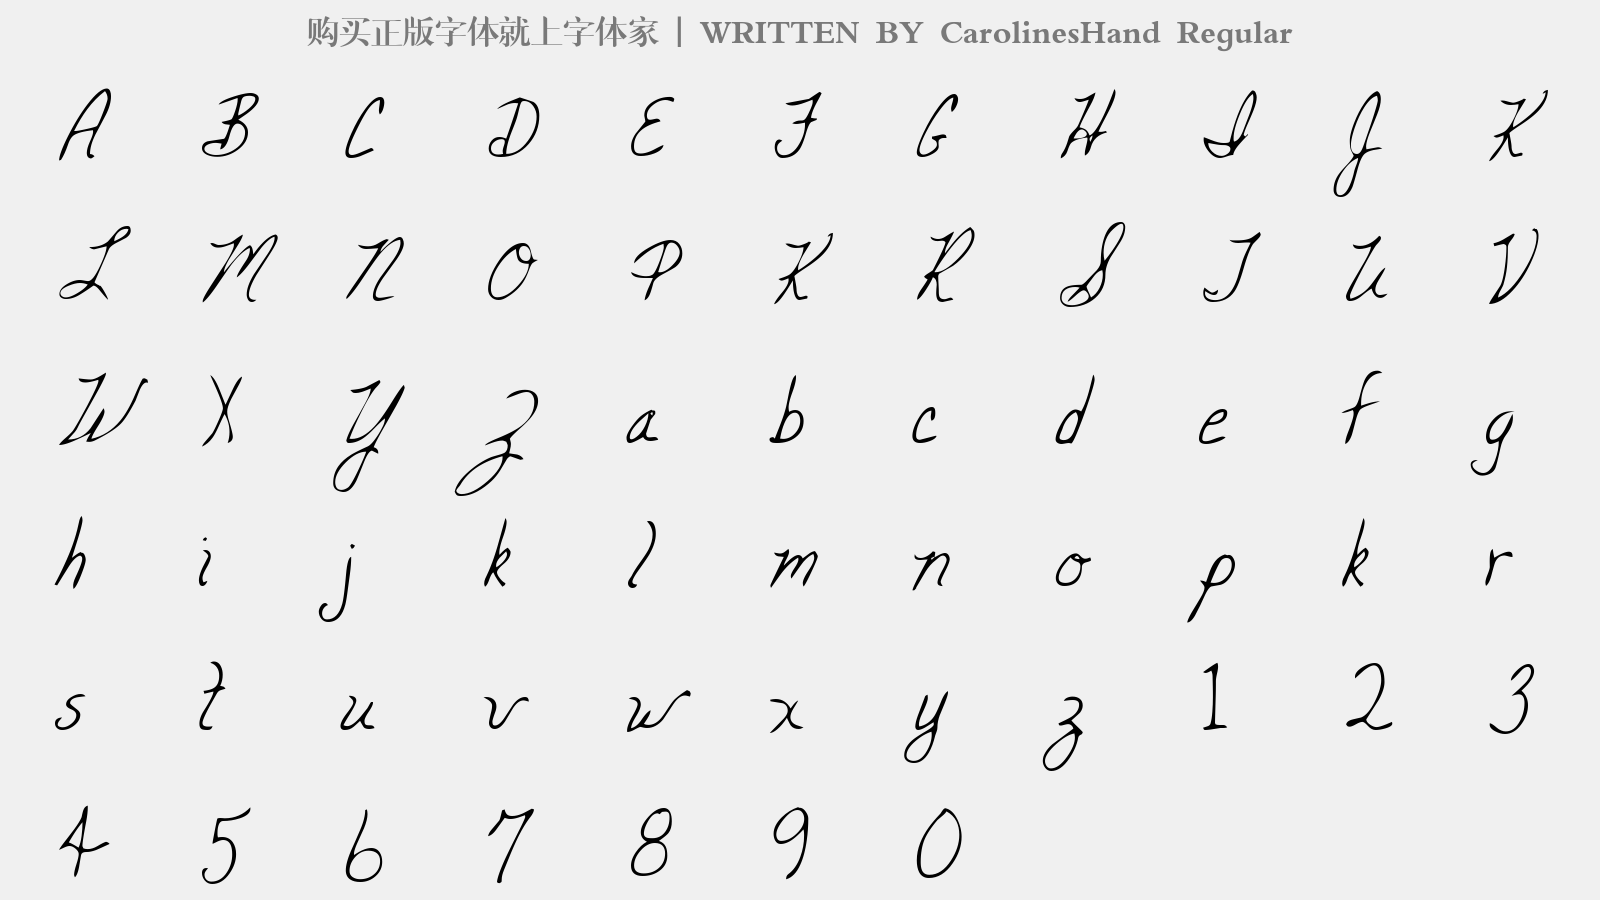 CarolinesHand Regular - 大写字母/小写字母/数字